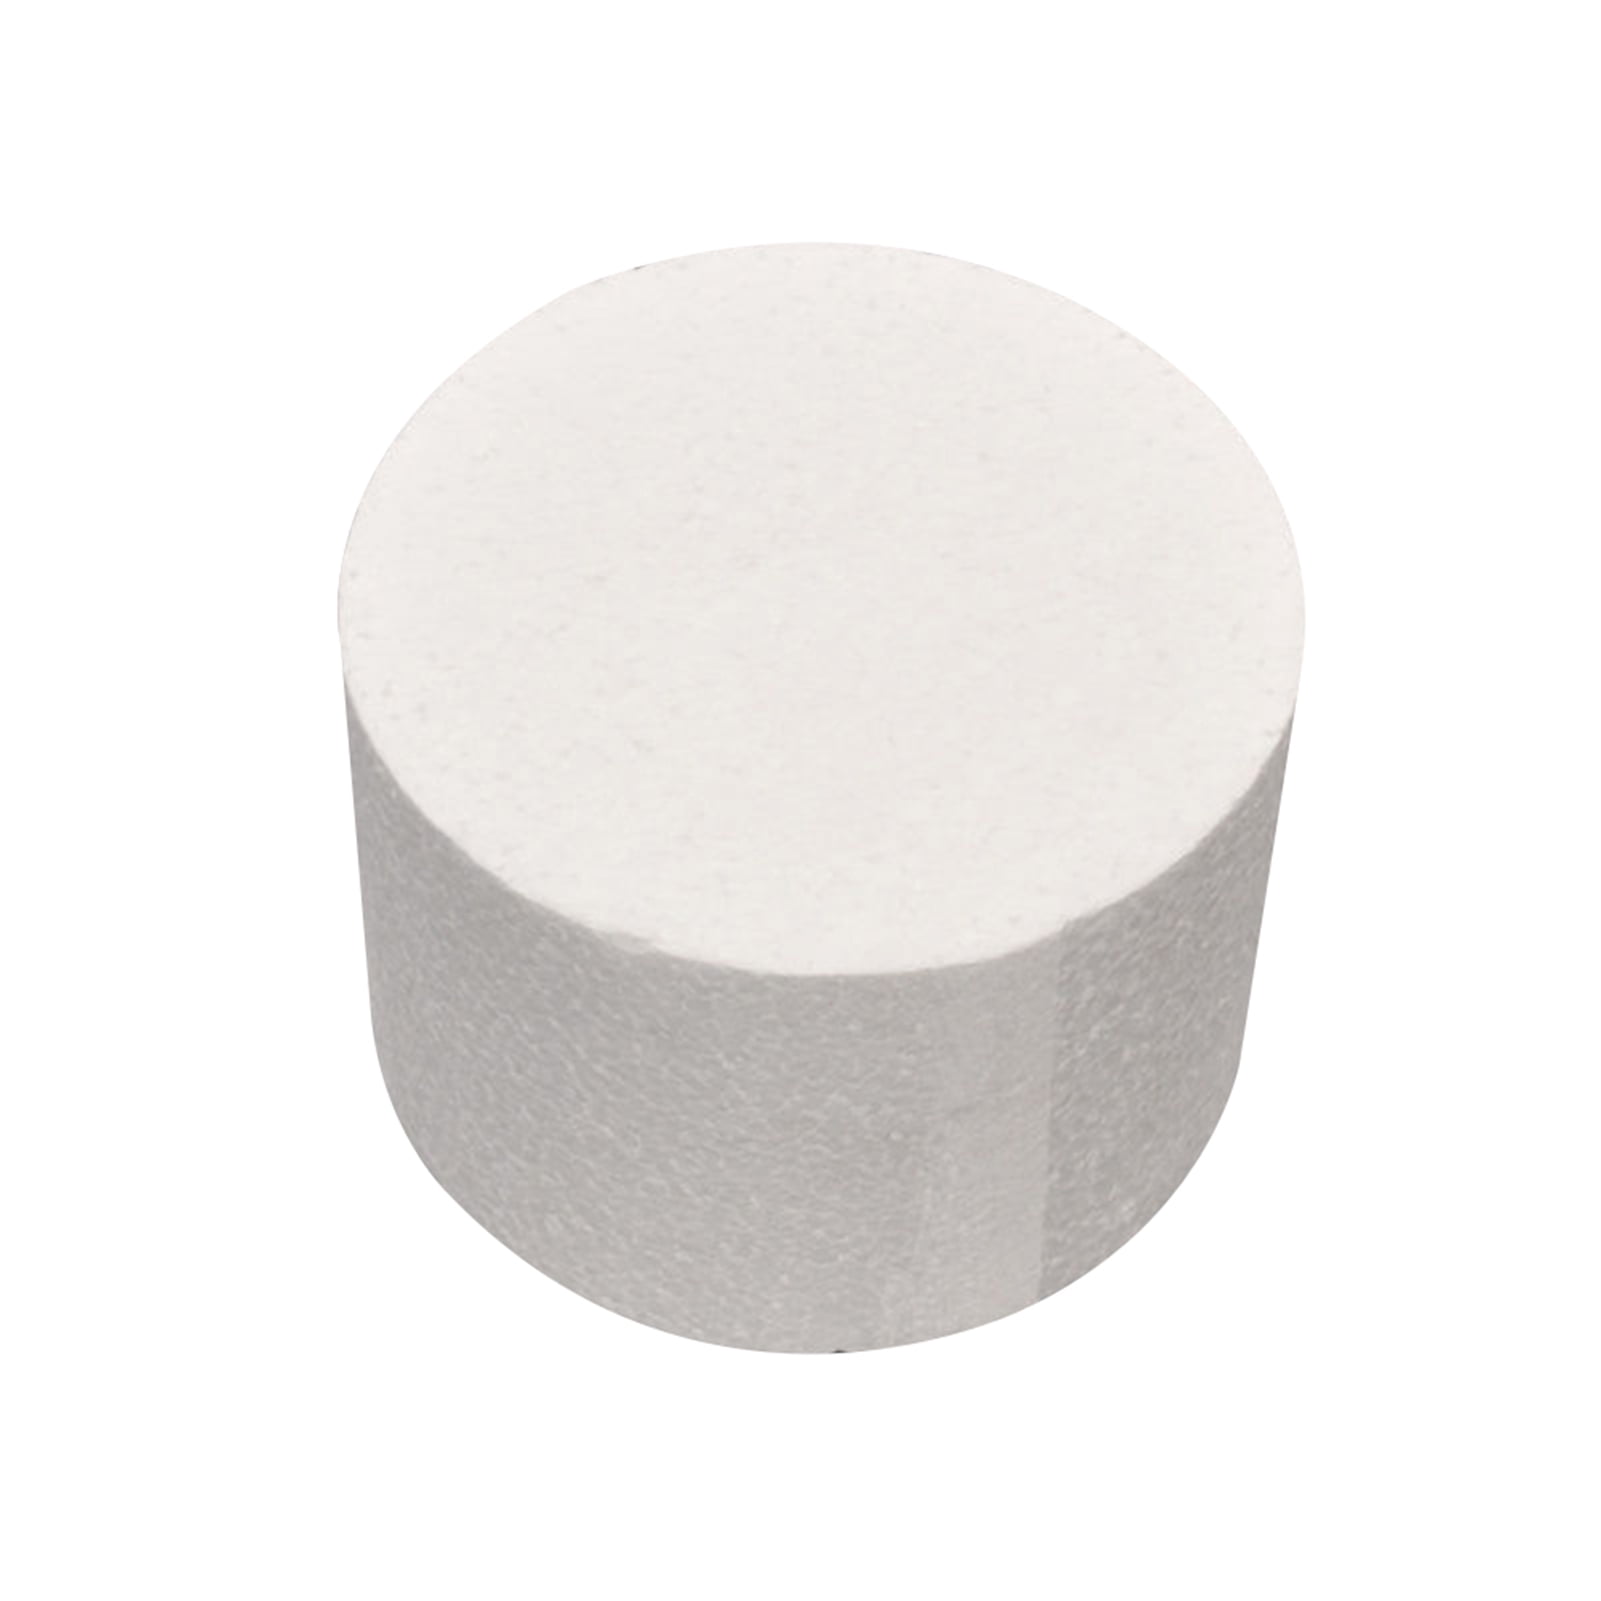 4/6/8inch Round Styrofoam Foam Cake Dummy Sugarcraft' Decor Practice Model Tool 